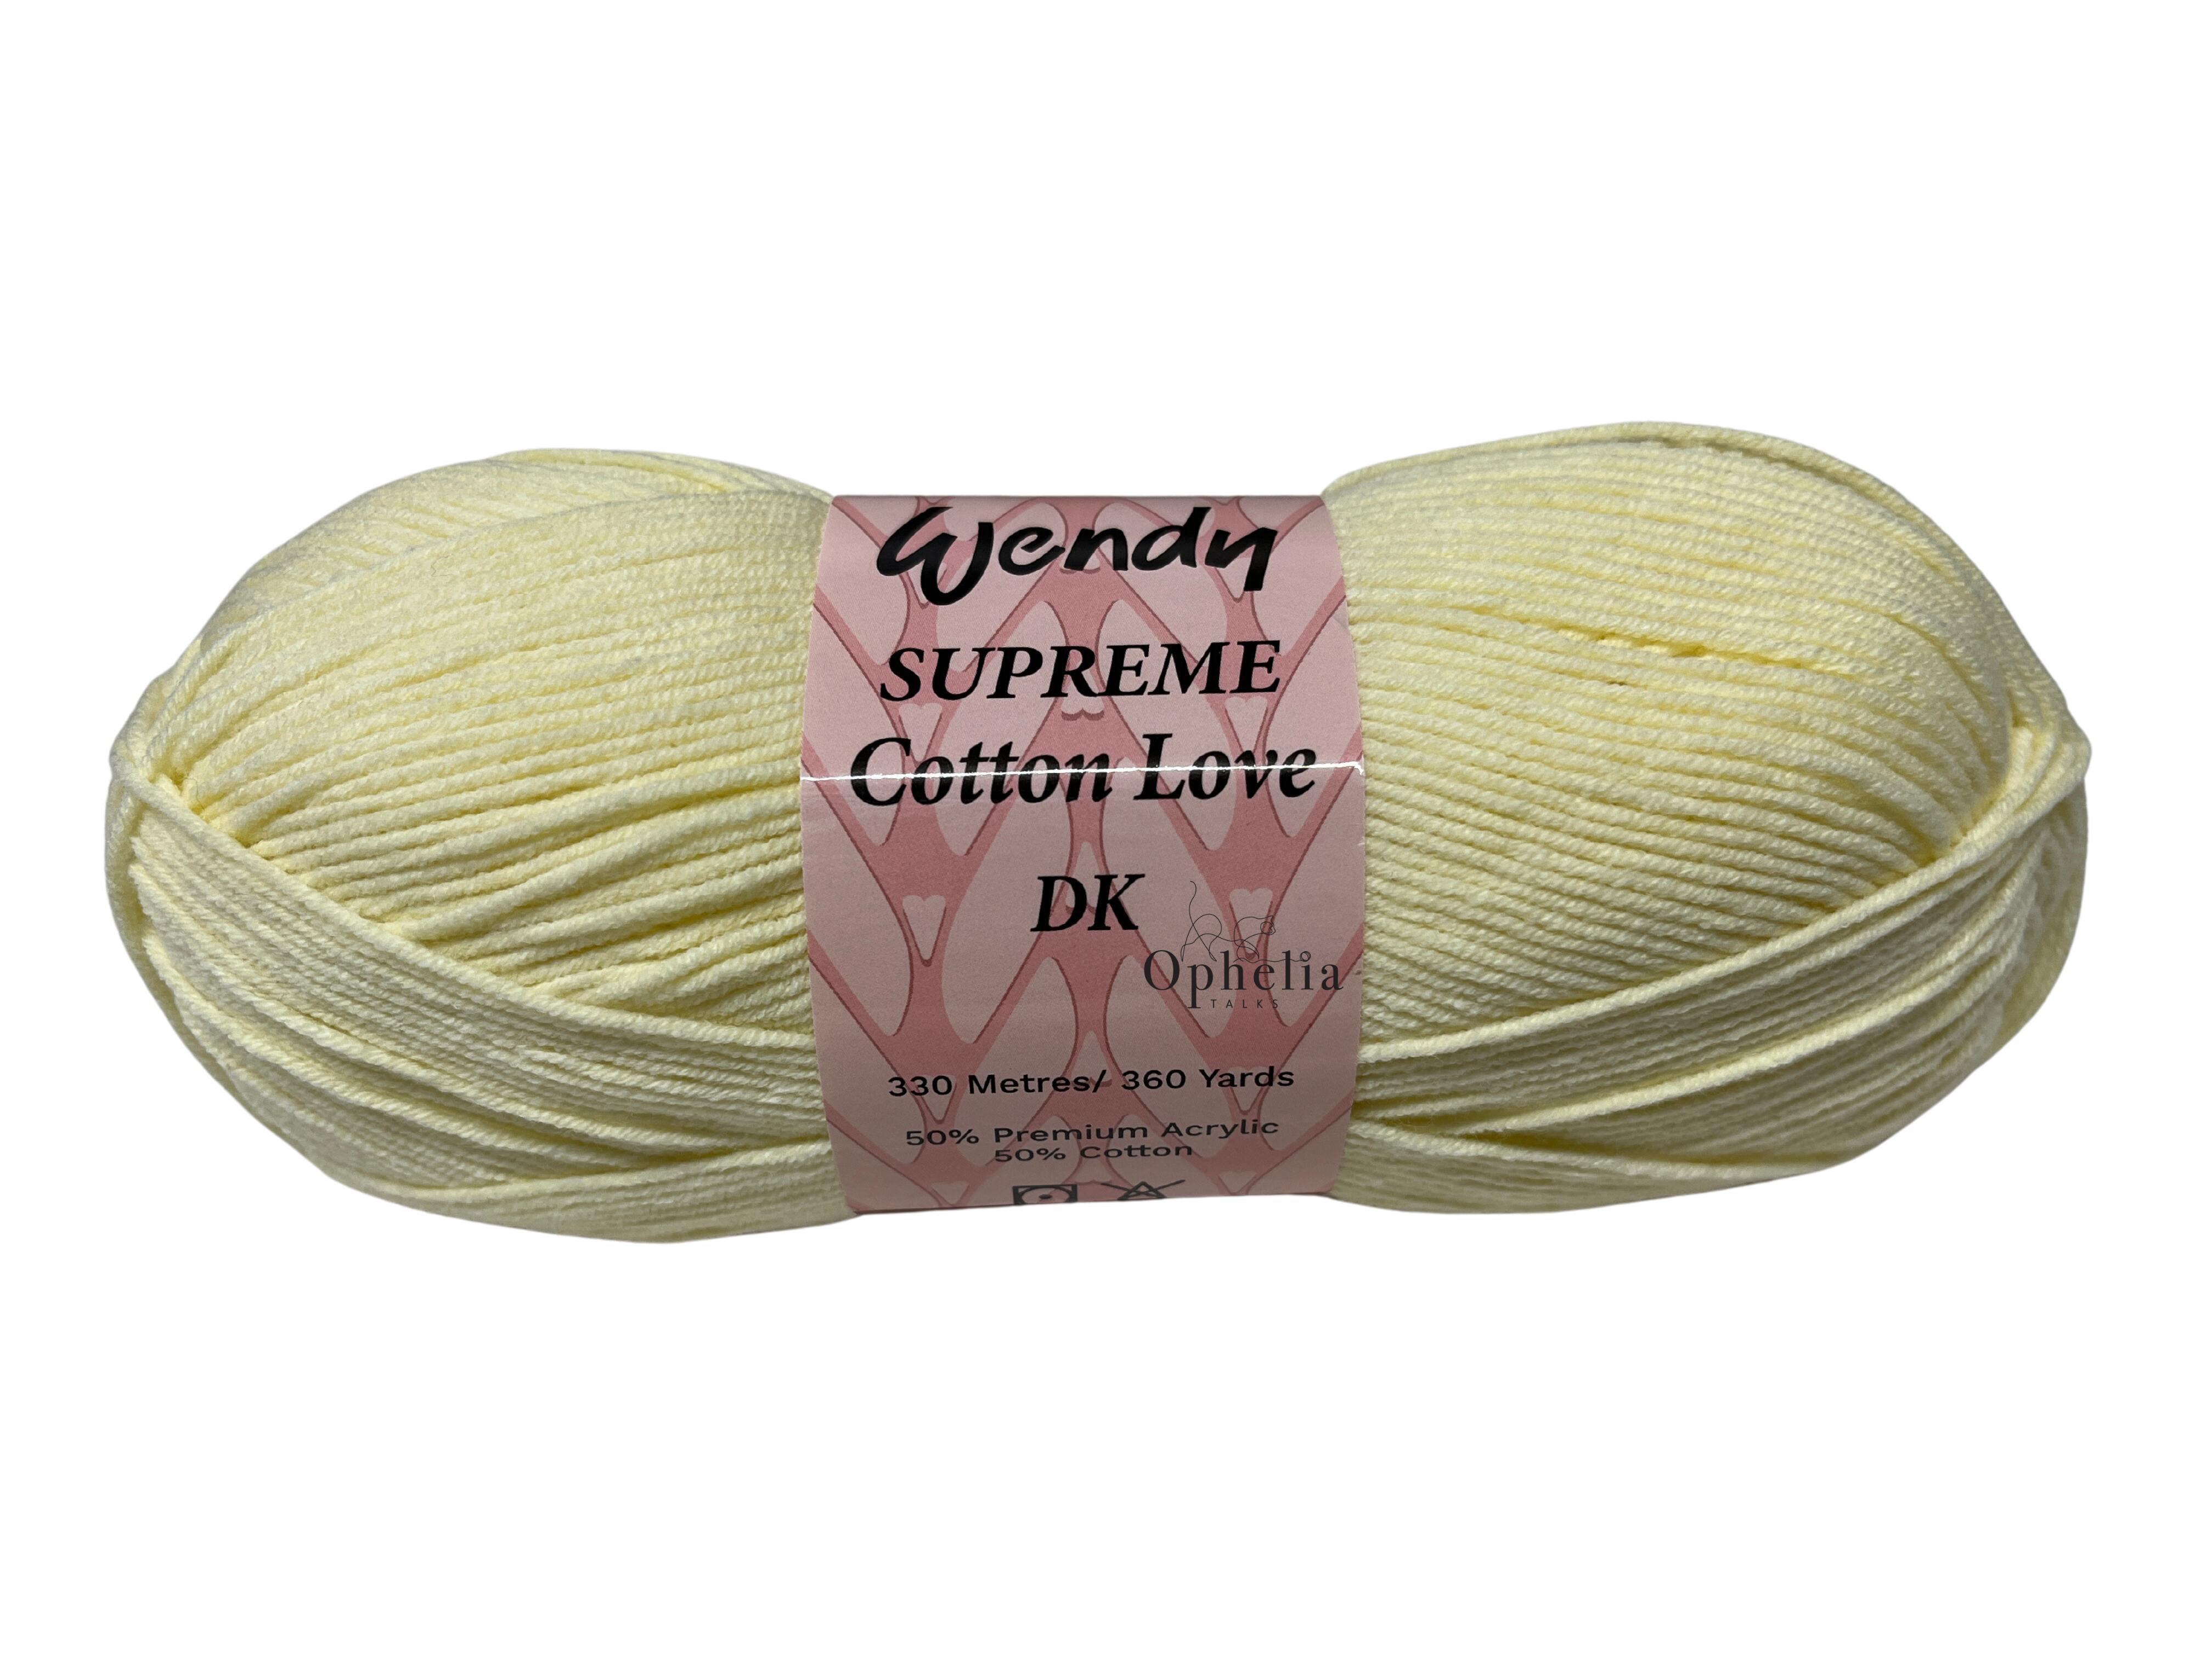 Wendy supreme cotton love in the colour Cream WCT02